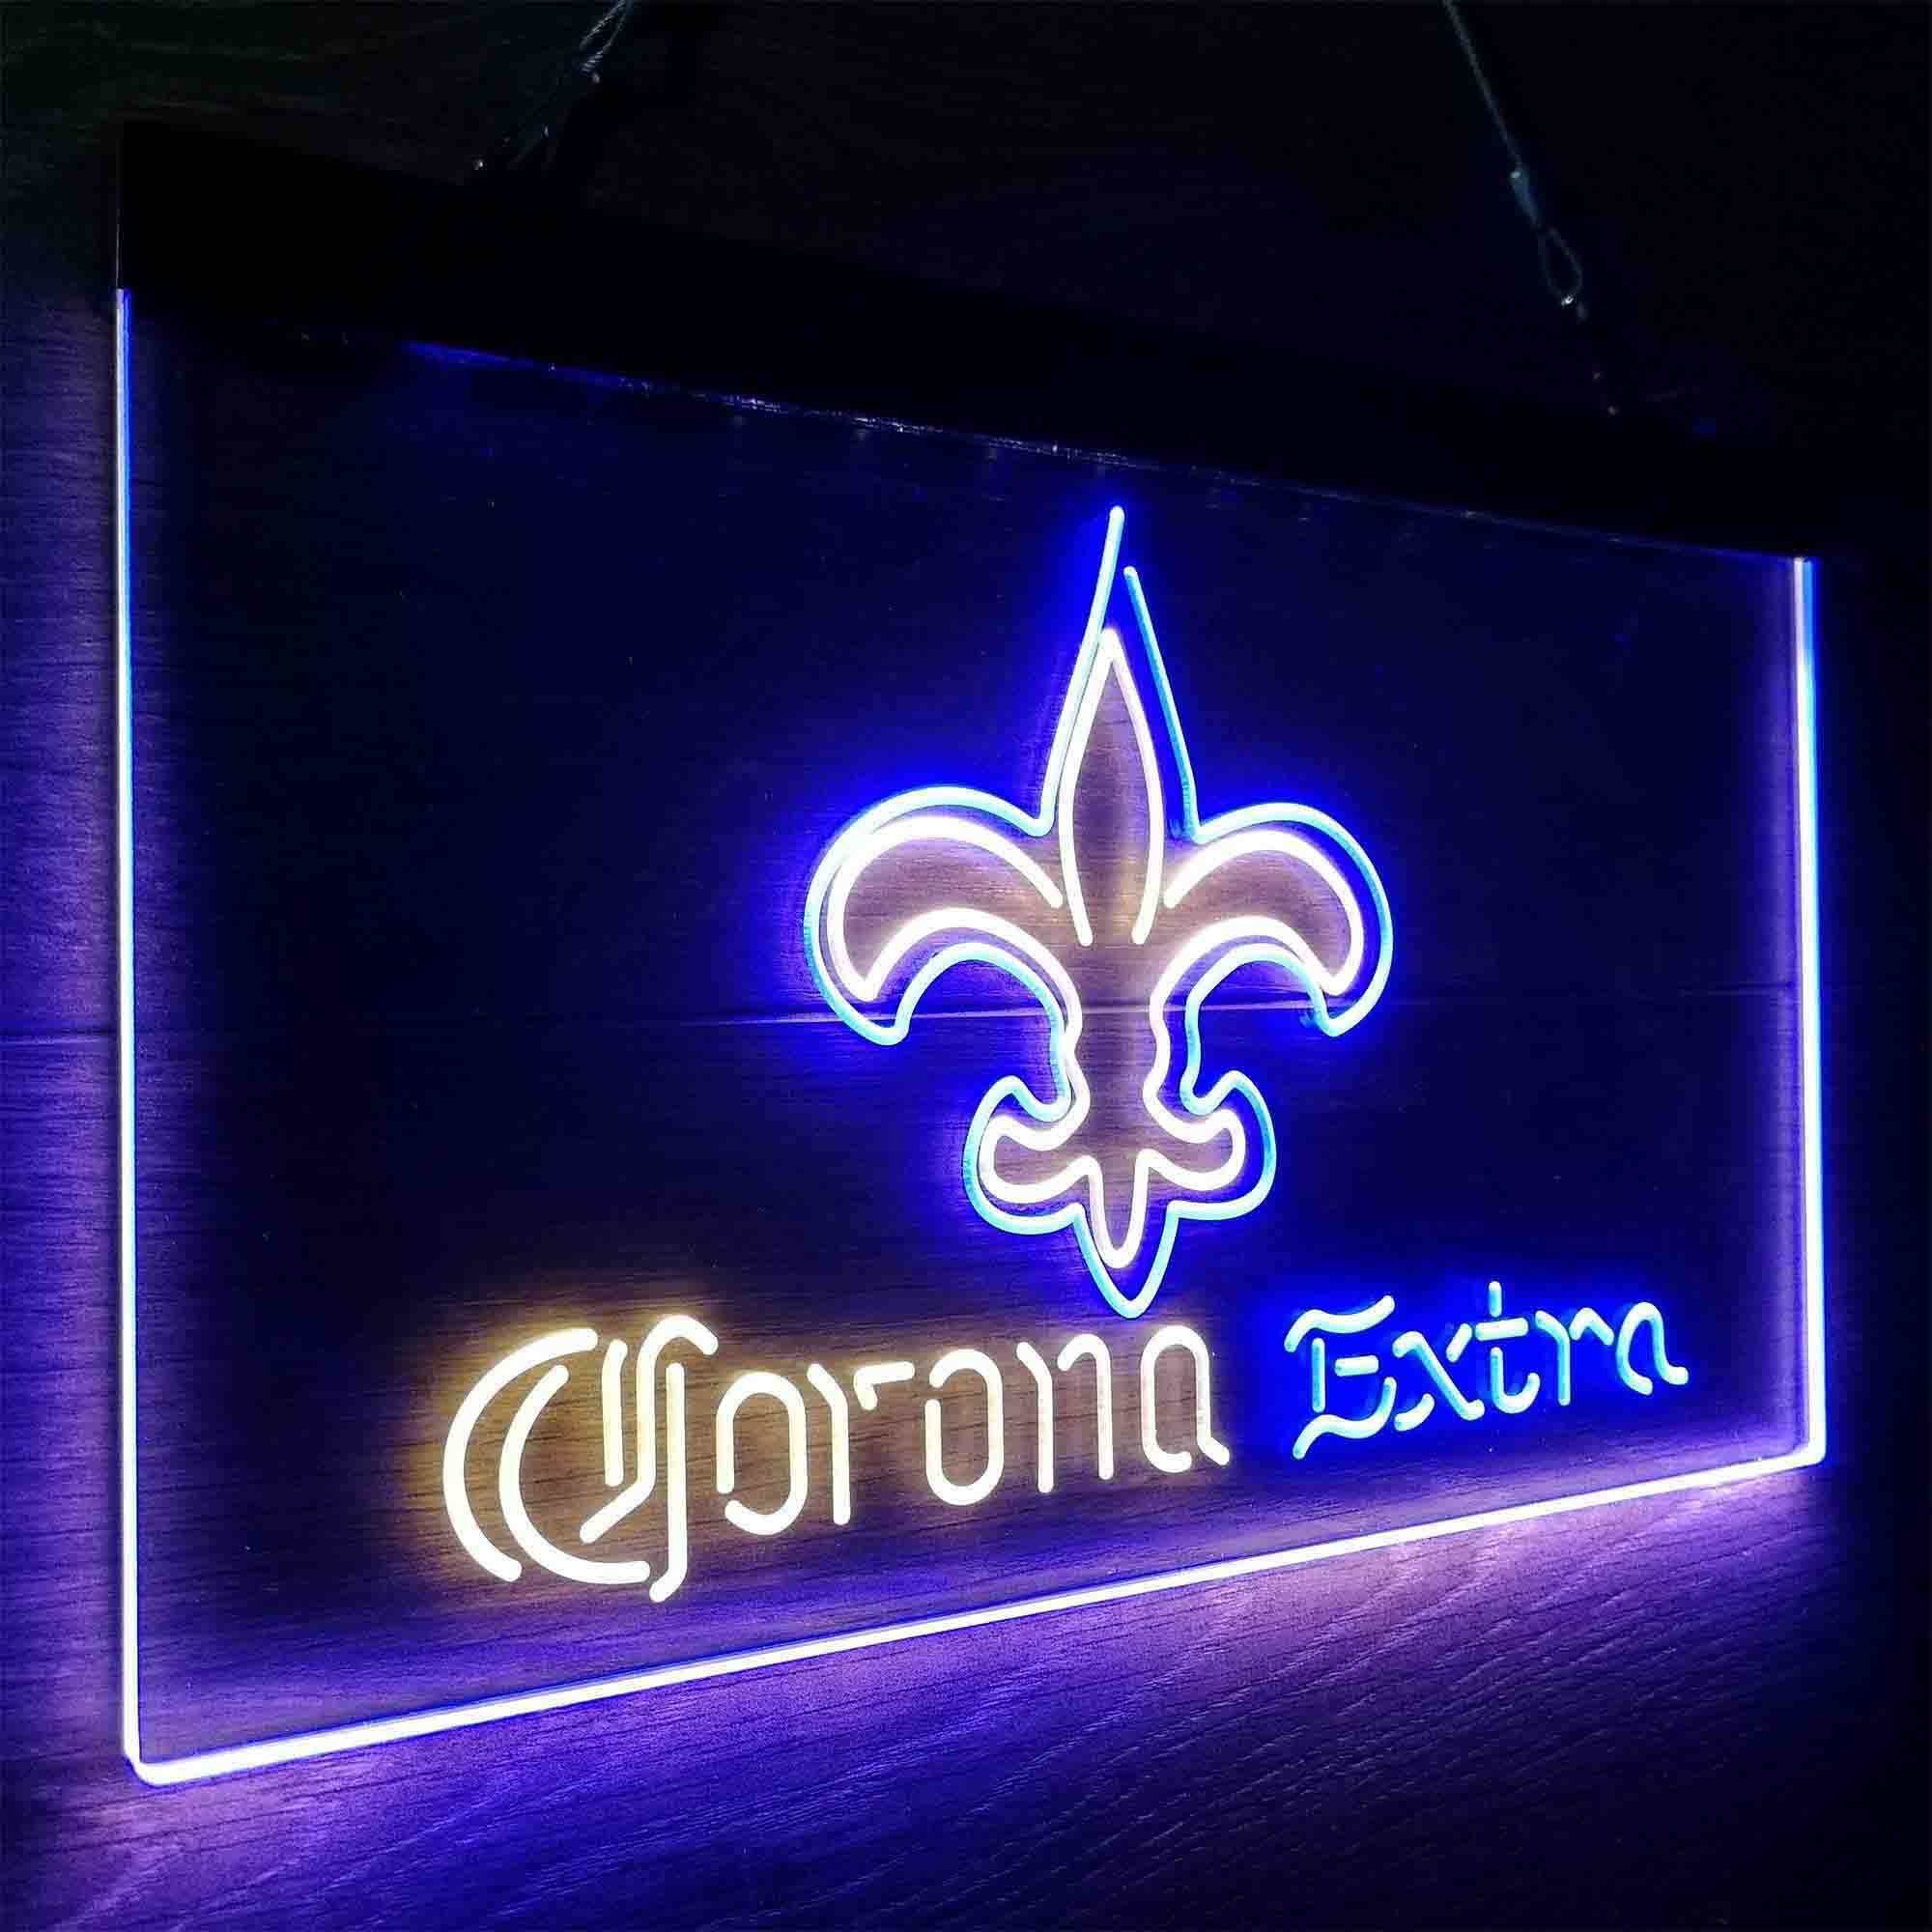 New Orleans Saints Corona Extra Neon-Like LED Sign - ProLedSign